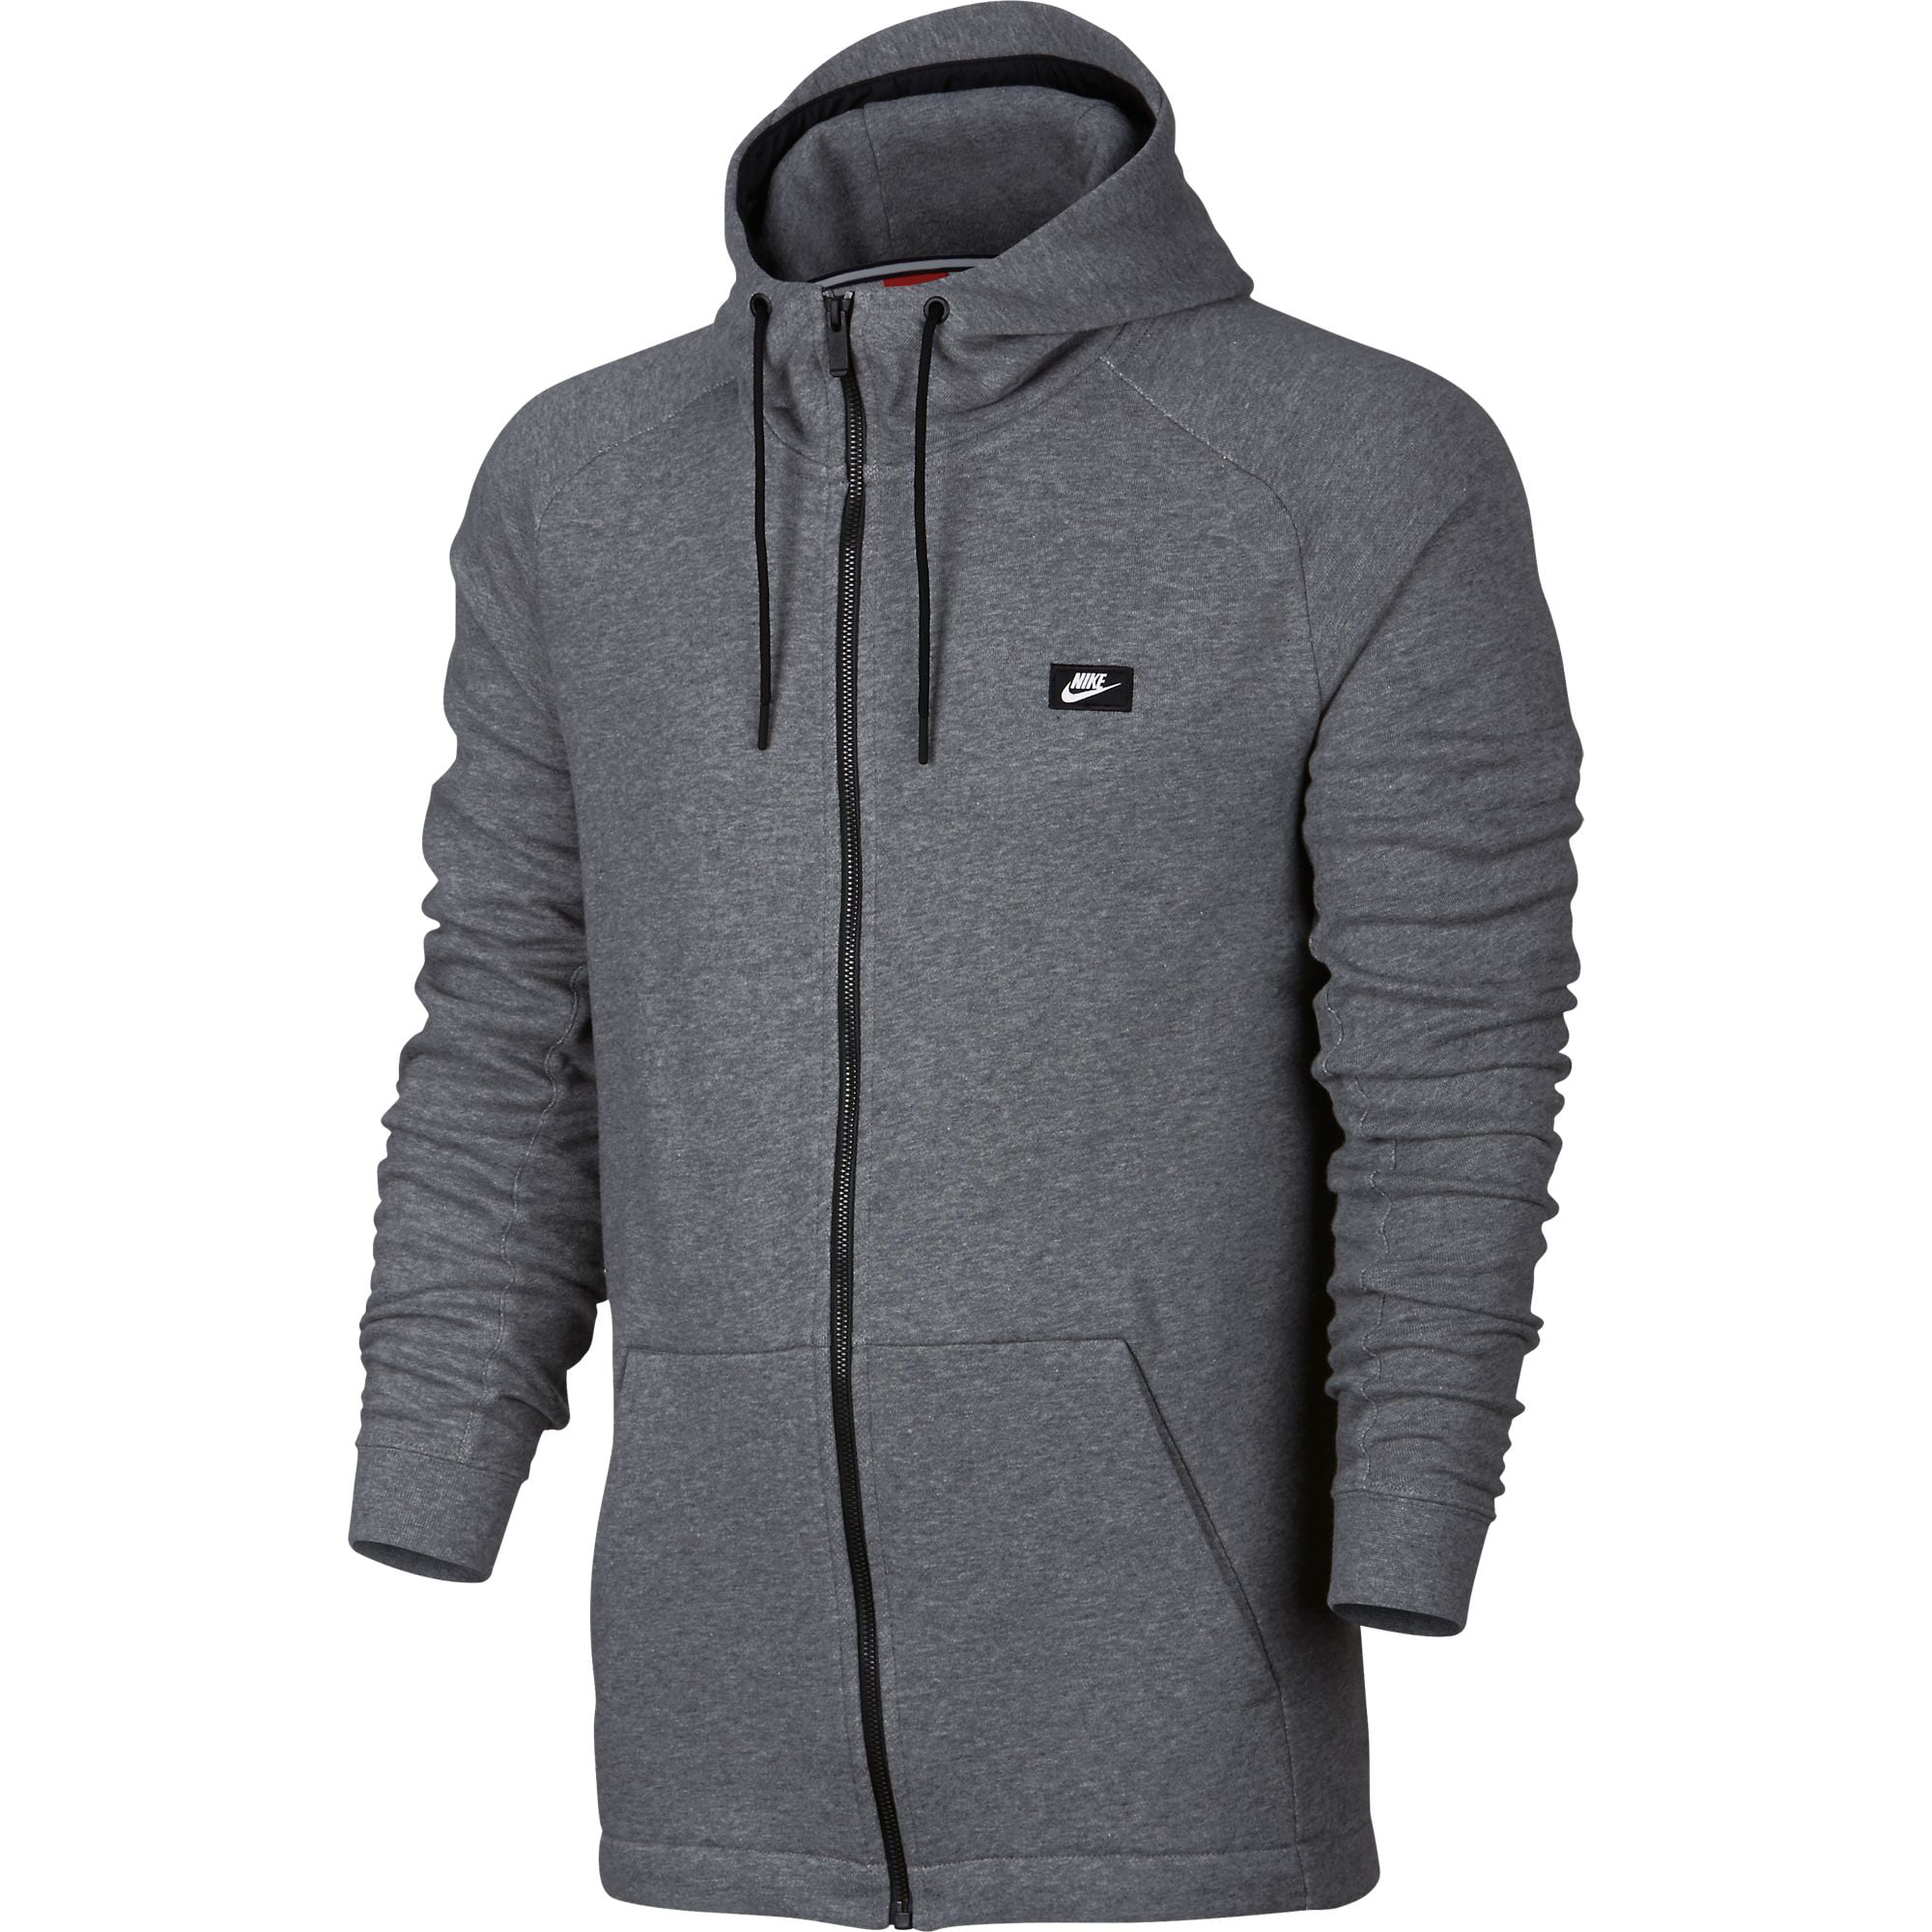 Beperking formeel Op het randje Nike Sportswear Modern Men's Hoodie Carbon Heather Grey/Black/White  805130-091 - Walmart.com